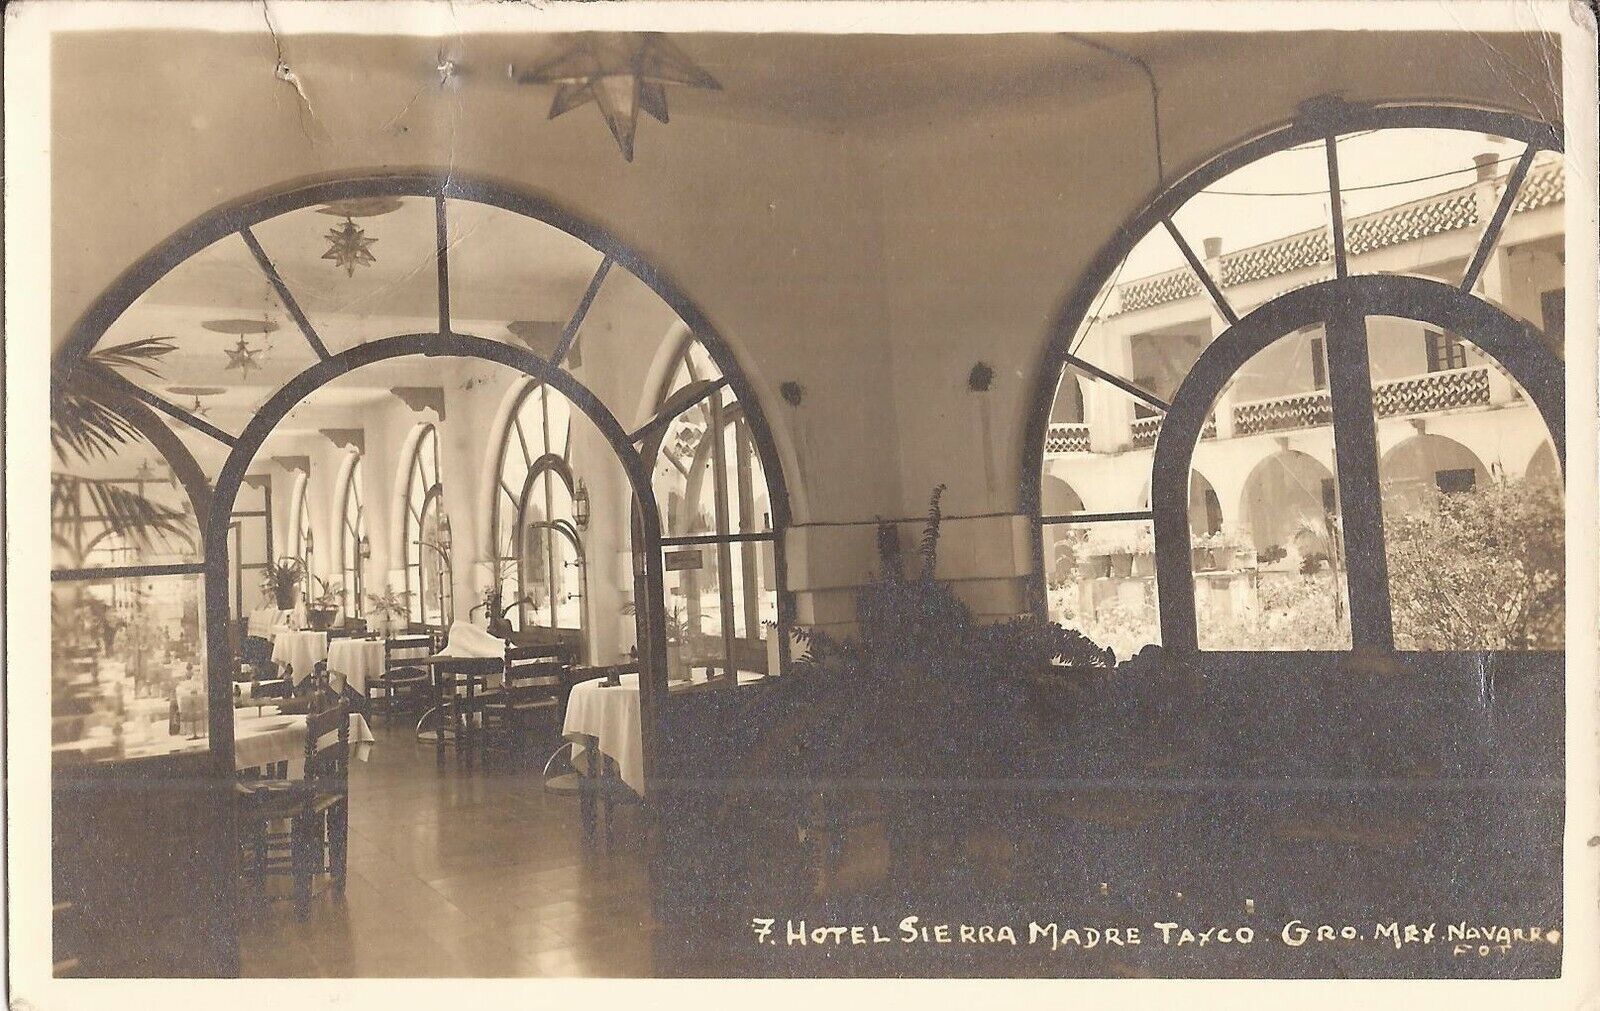 Taxco, MEXICO - Hotel Sierra Madre - REAL PHOTO - 1945 - restaurant interior